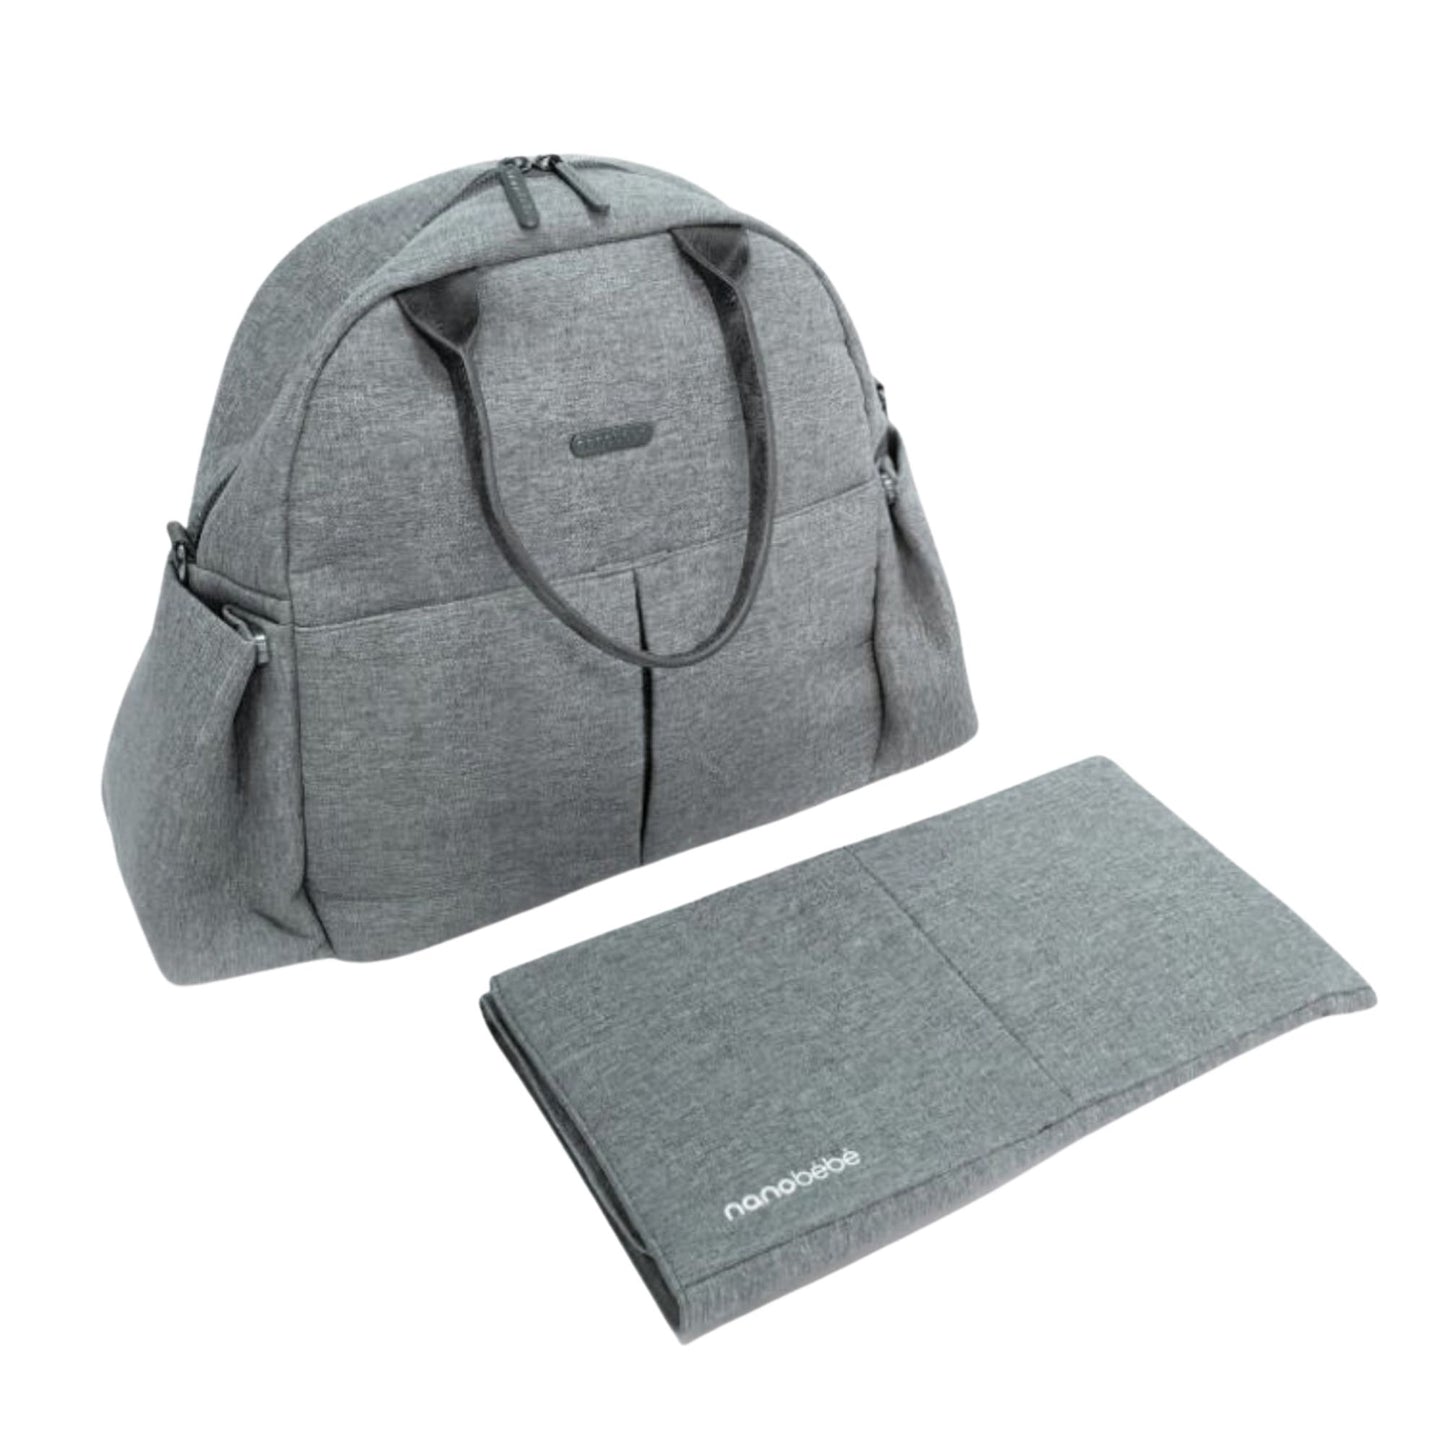 Nanobebe Backpack Diaper Bag